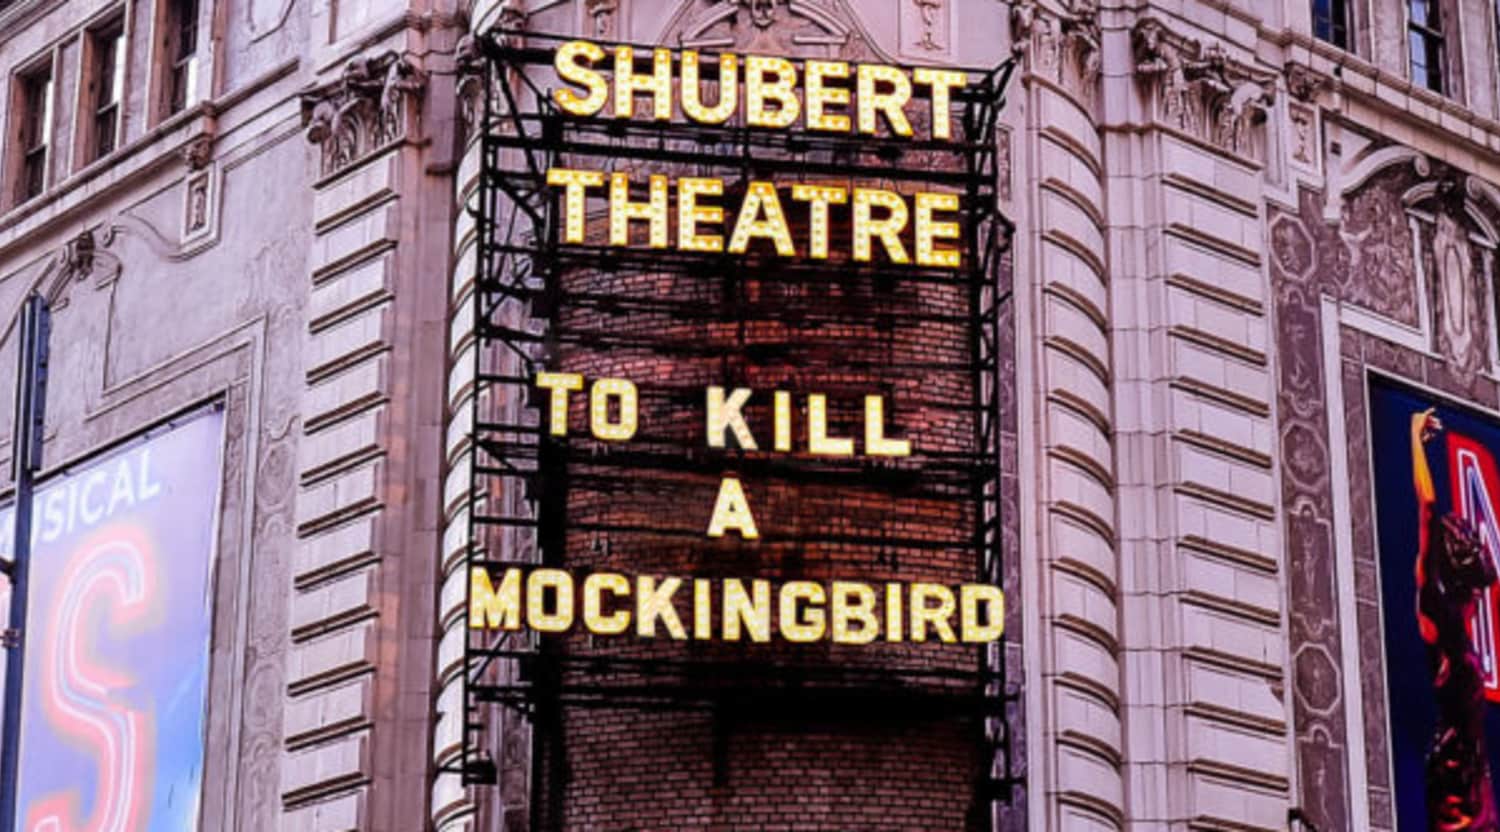 Shubert Theater Seating Chart To Kill A Mockingbird